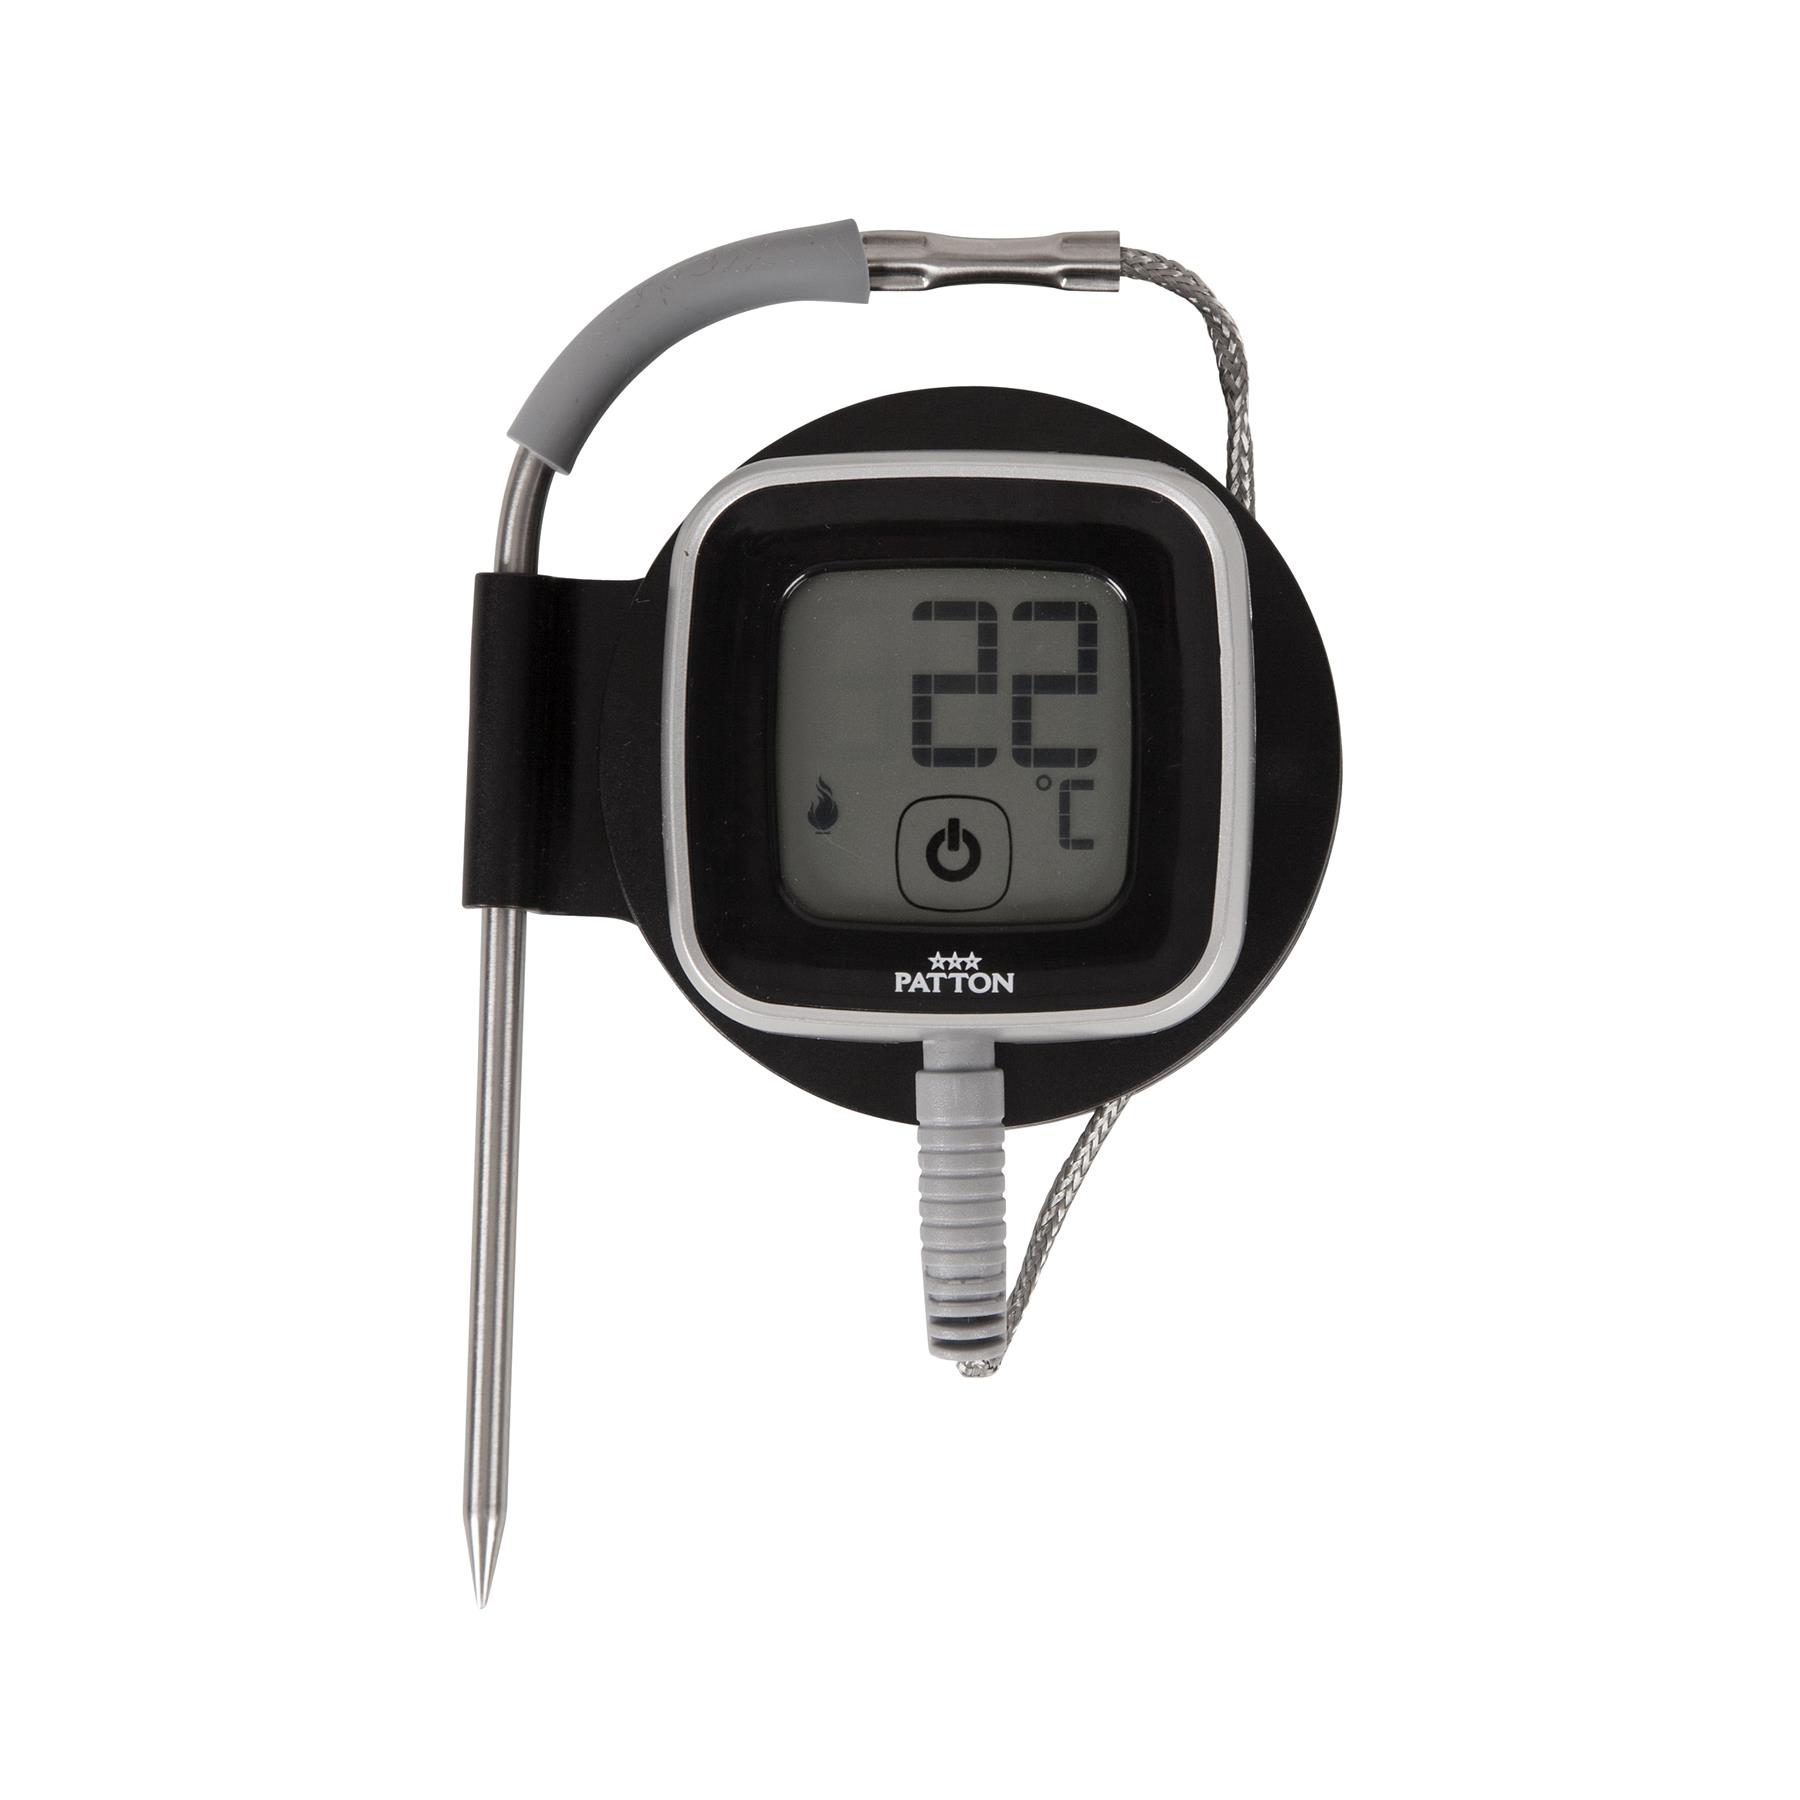 FonQ Patton Bluetooth Vleesthermometer aanbieding